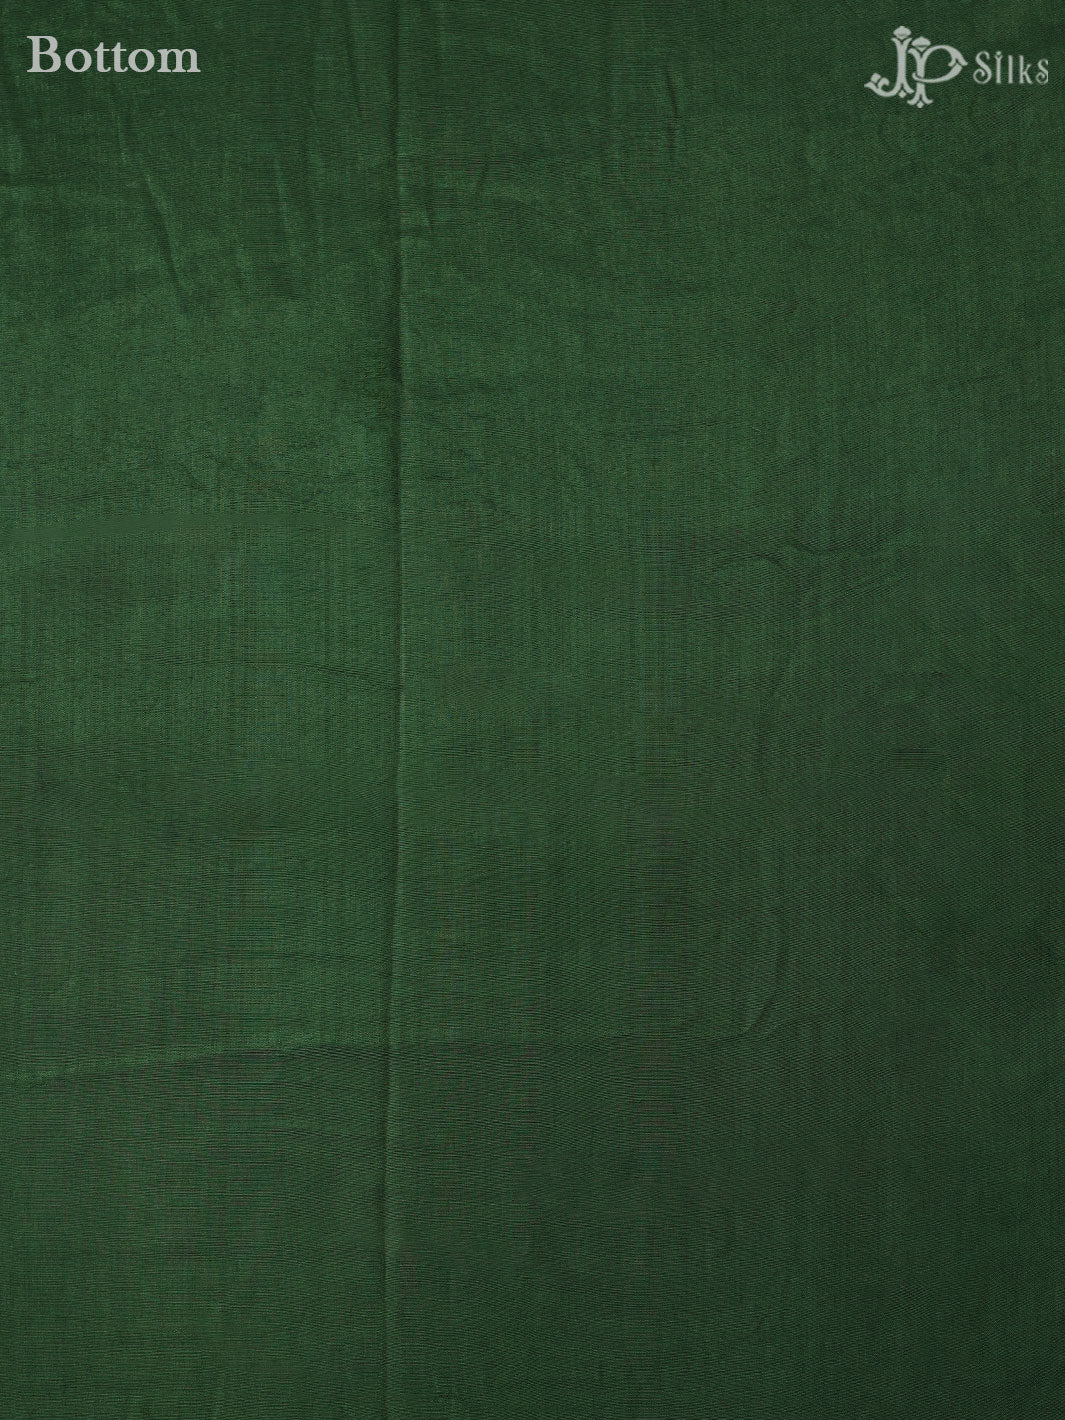 Green Organza Unstiched Chudidhar Material - E3595 - View 3